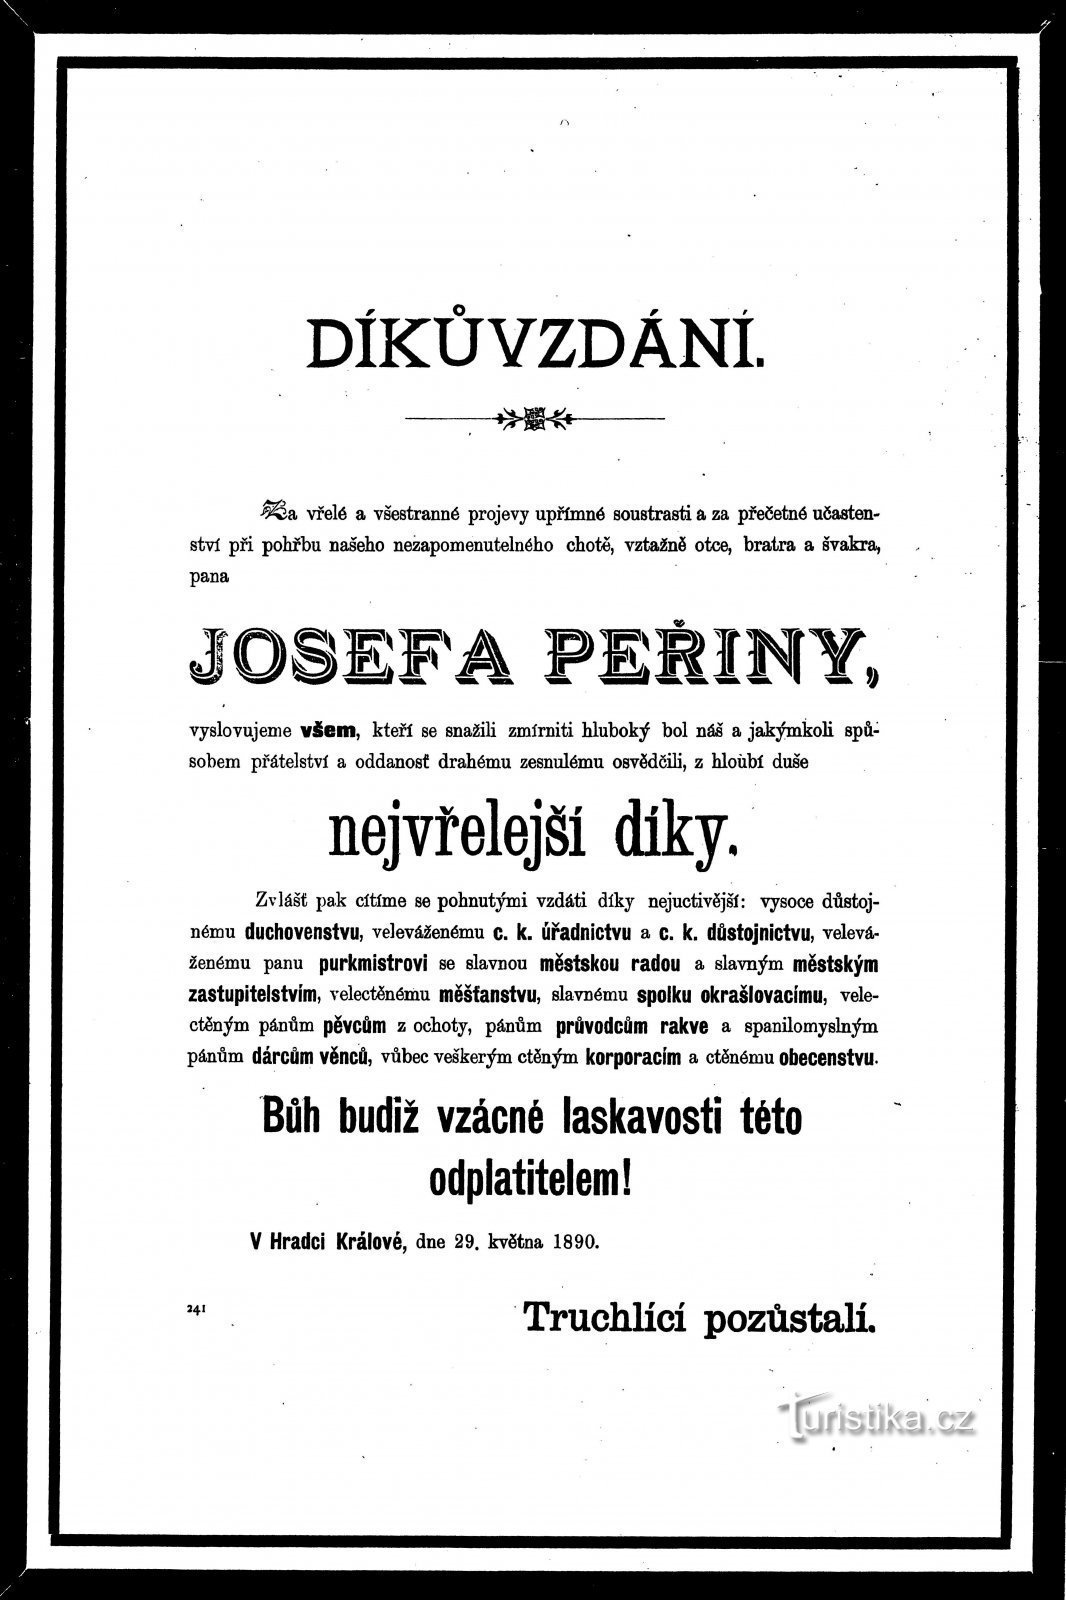 Gracias por asistir al funeral de Josef Peřina de 1890